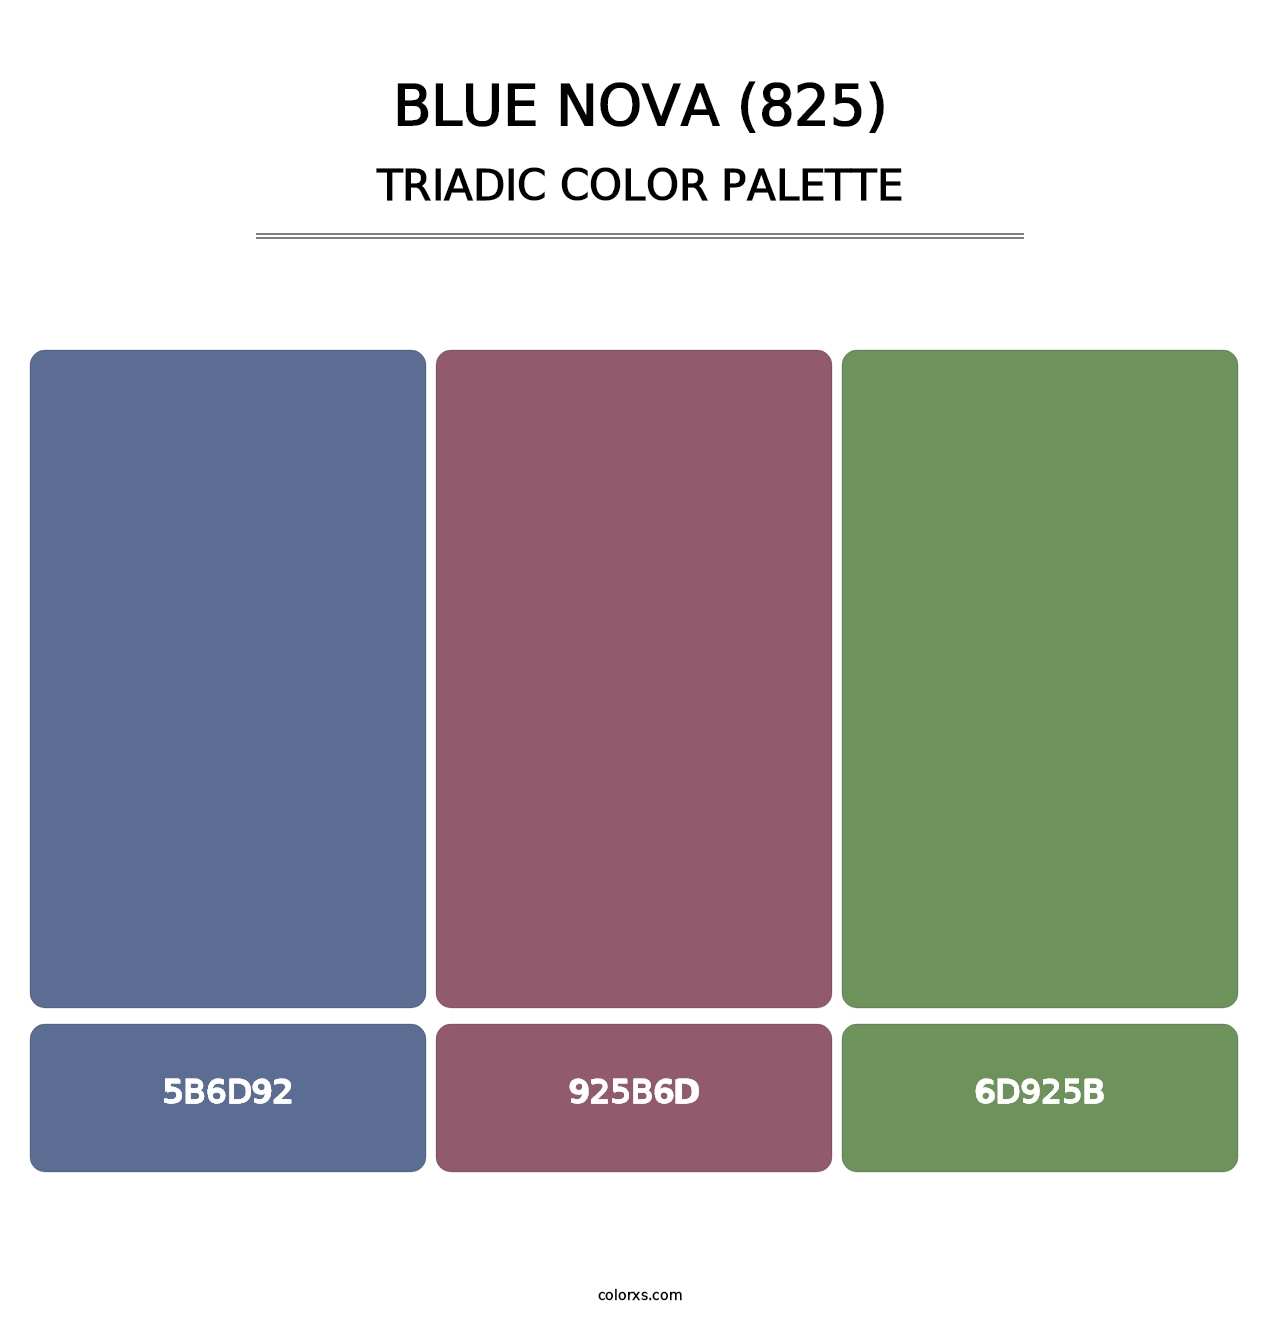 Blue Nova (825) - Triadic Color Palette